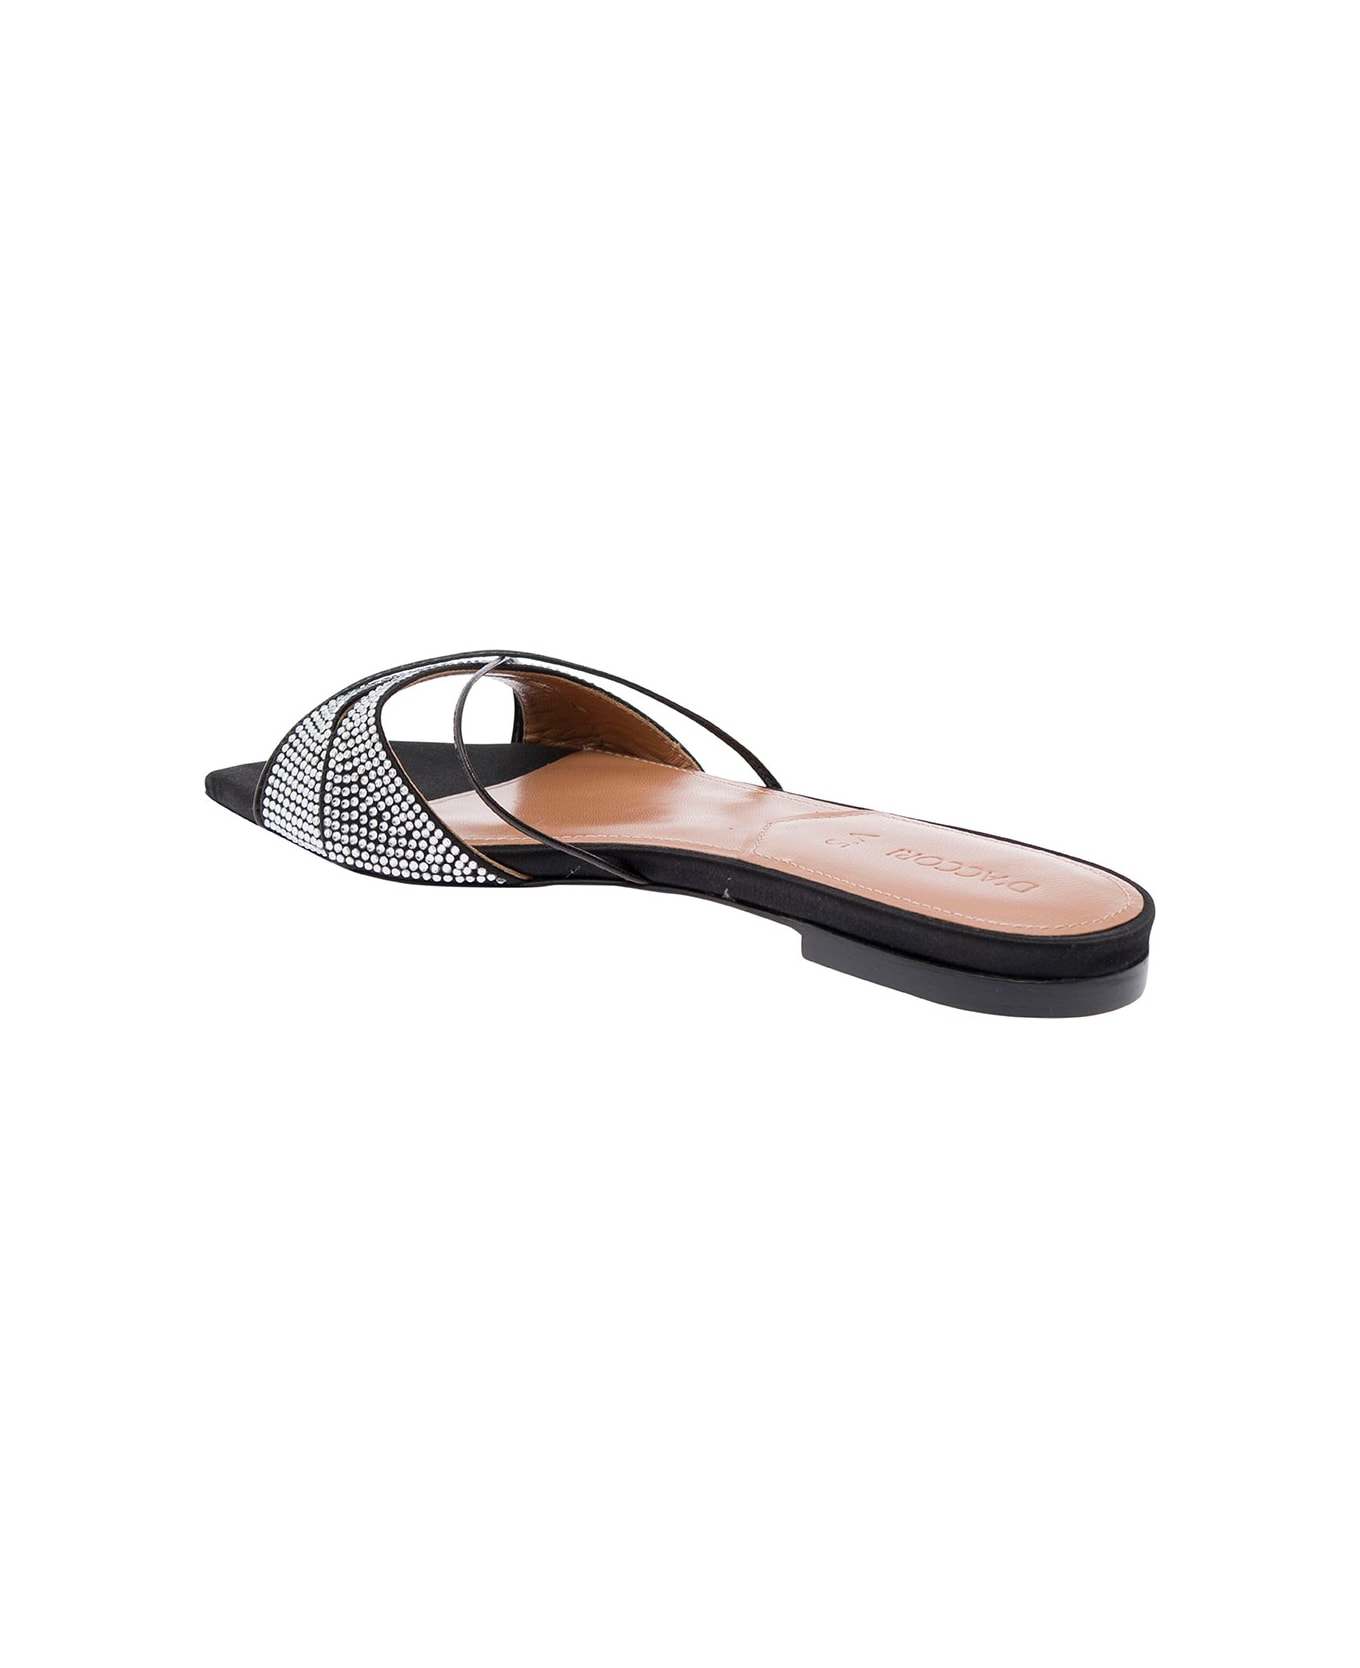 D'Accori 'lust' Black Flat Sandals With Criss-cross Straps With Rhinestone In Satin Woman - Black サンダル